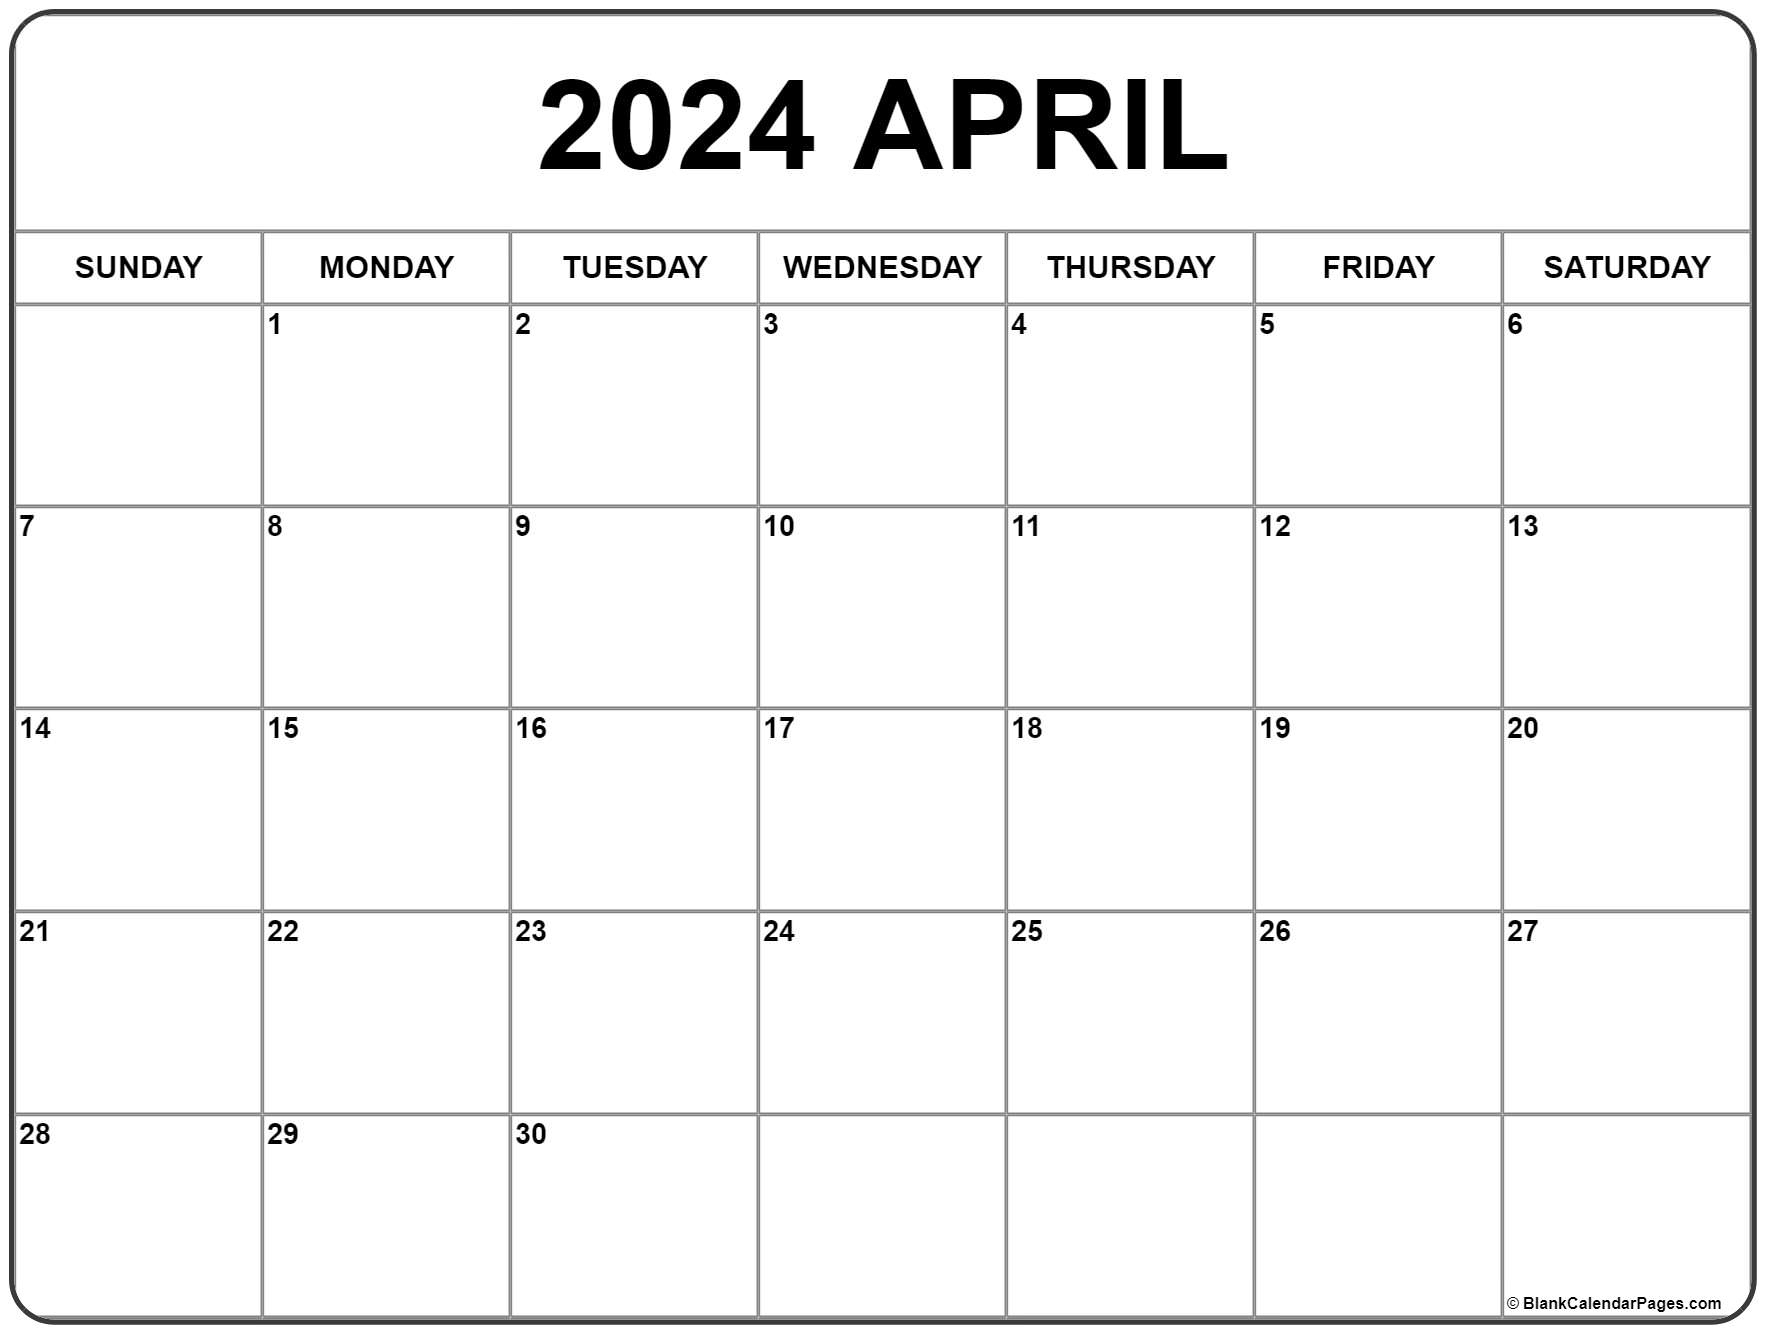 April 2024 Calendar | Free Printable Calendar | Printable Calendar April 2024 Monthly